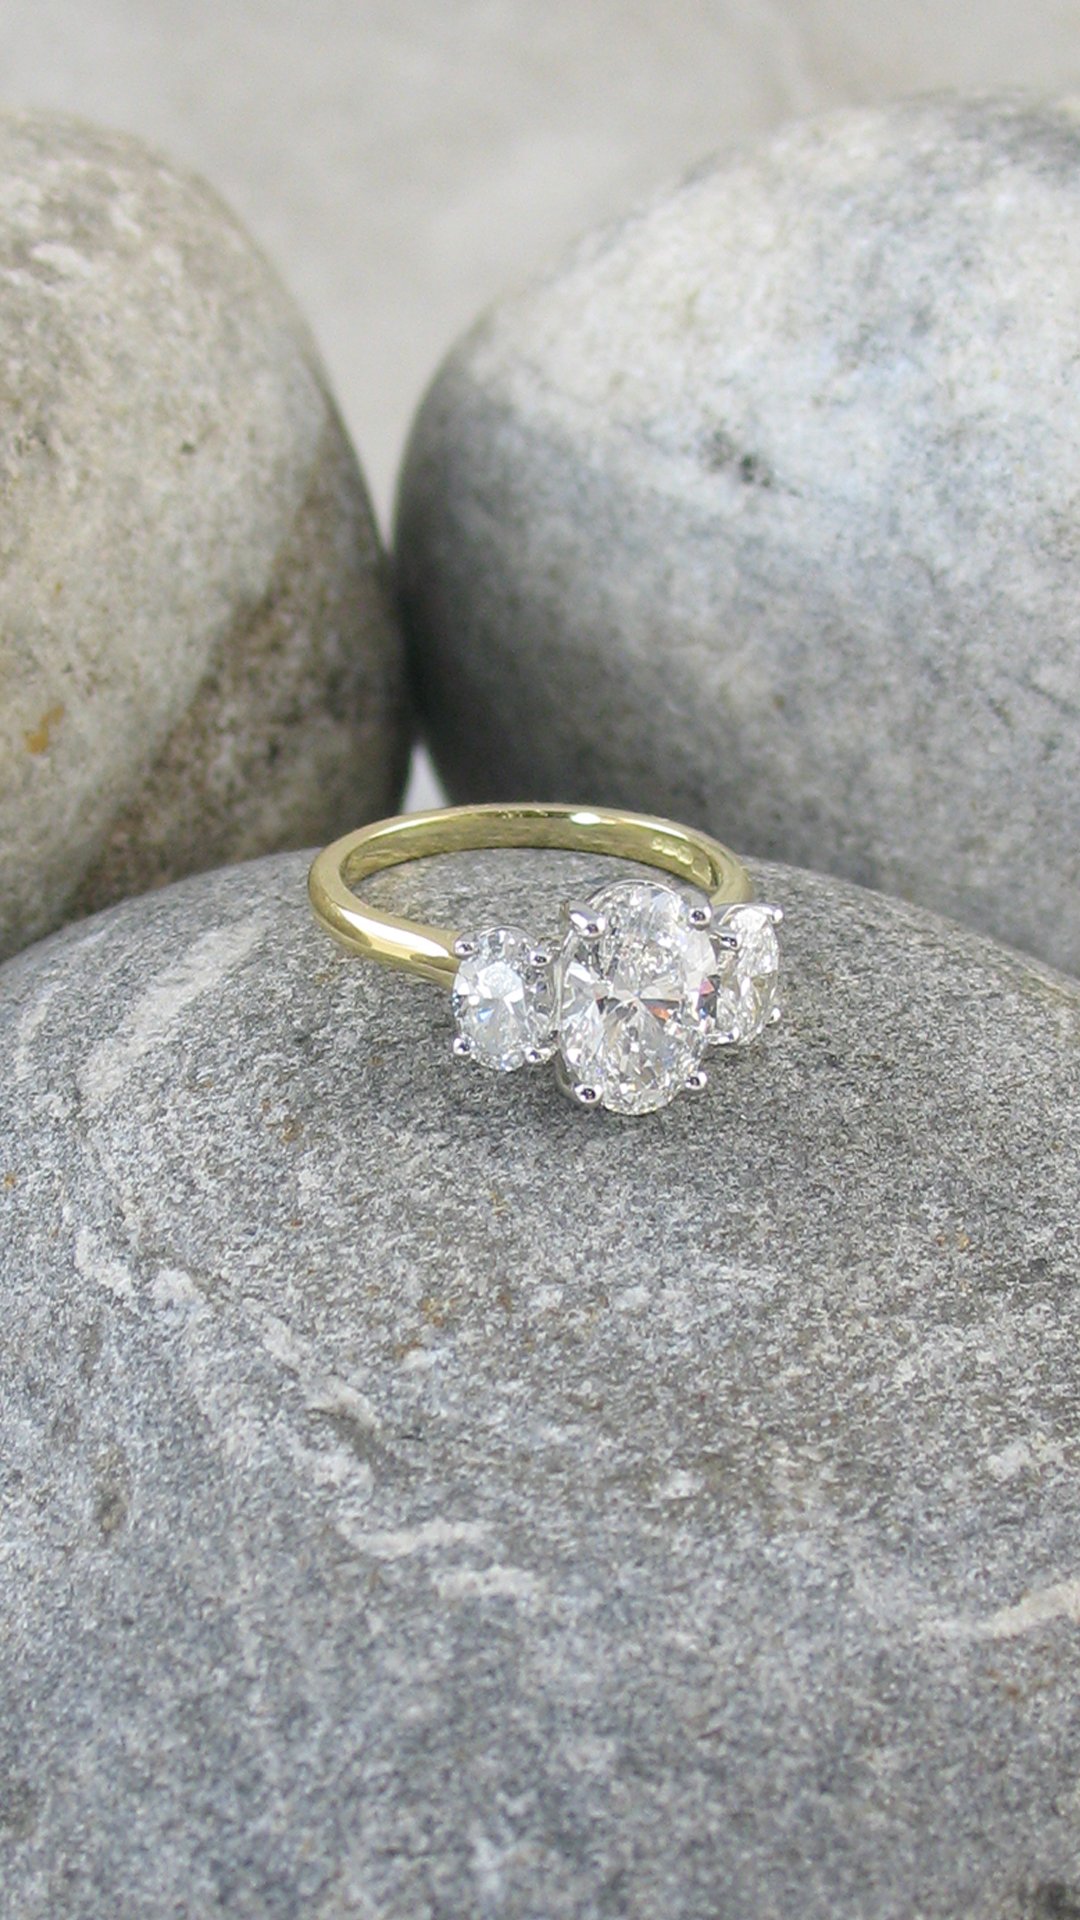 A bespoke oval diamond trilogy engagement ring